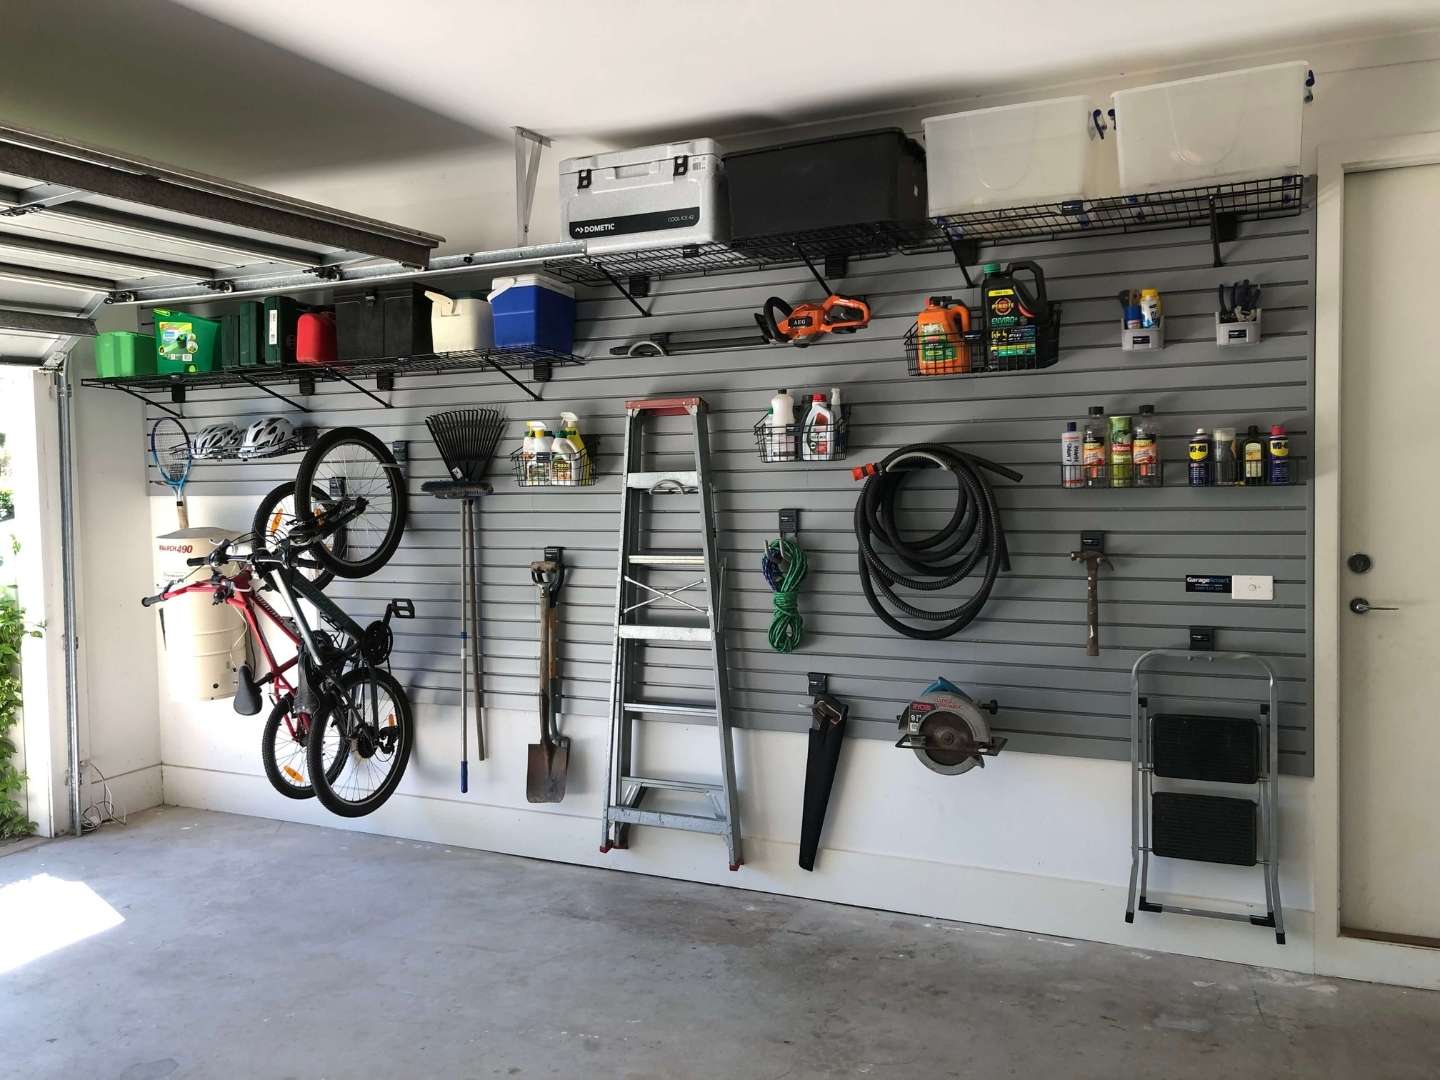 Gladiator 48-inch Garage Wall Storage GearWall Panel, 52% OFF